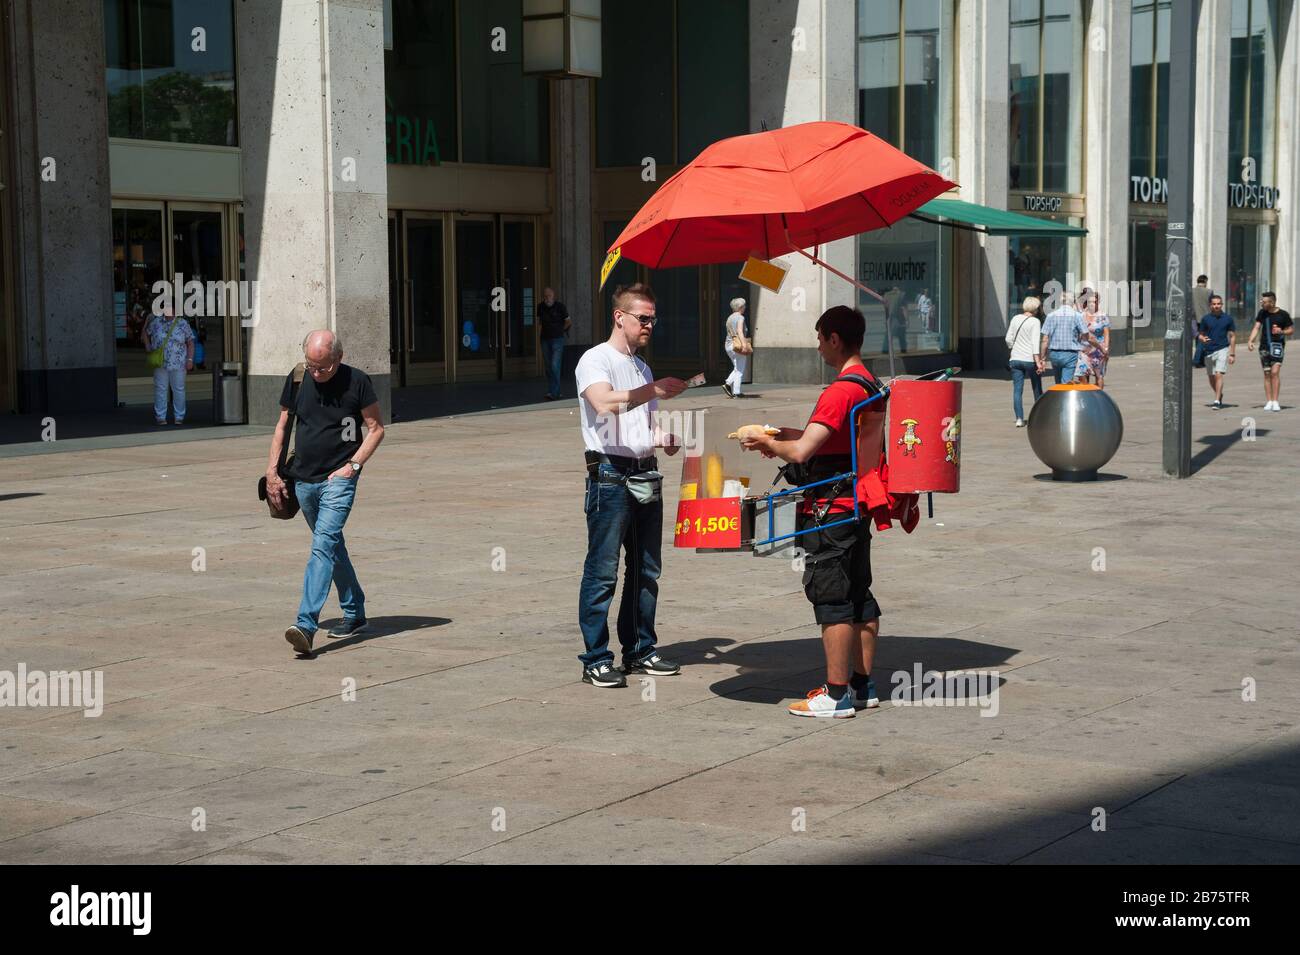 29.05.2017, Berlin, Germany, Europe - A mobile sausage seller on Berlin  Alexanderplatz. [automated translation] Stock Photo - Alamy